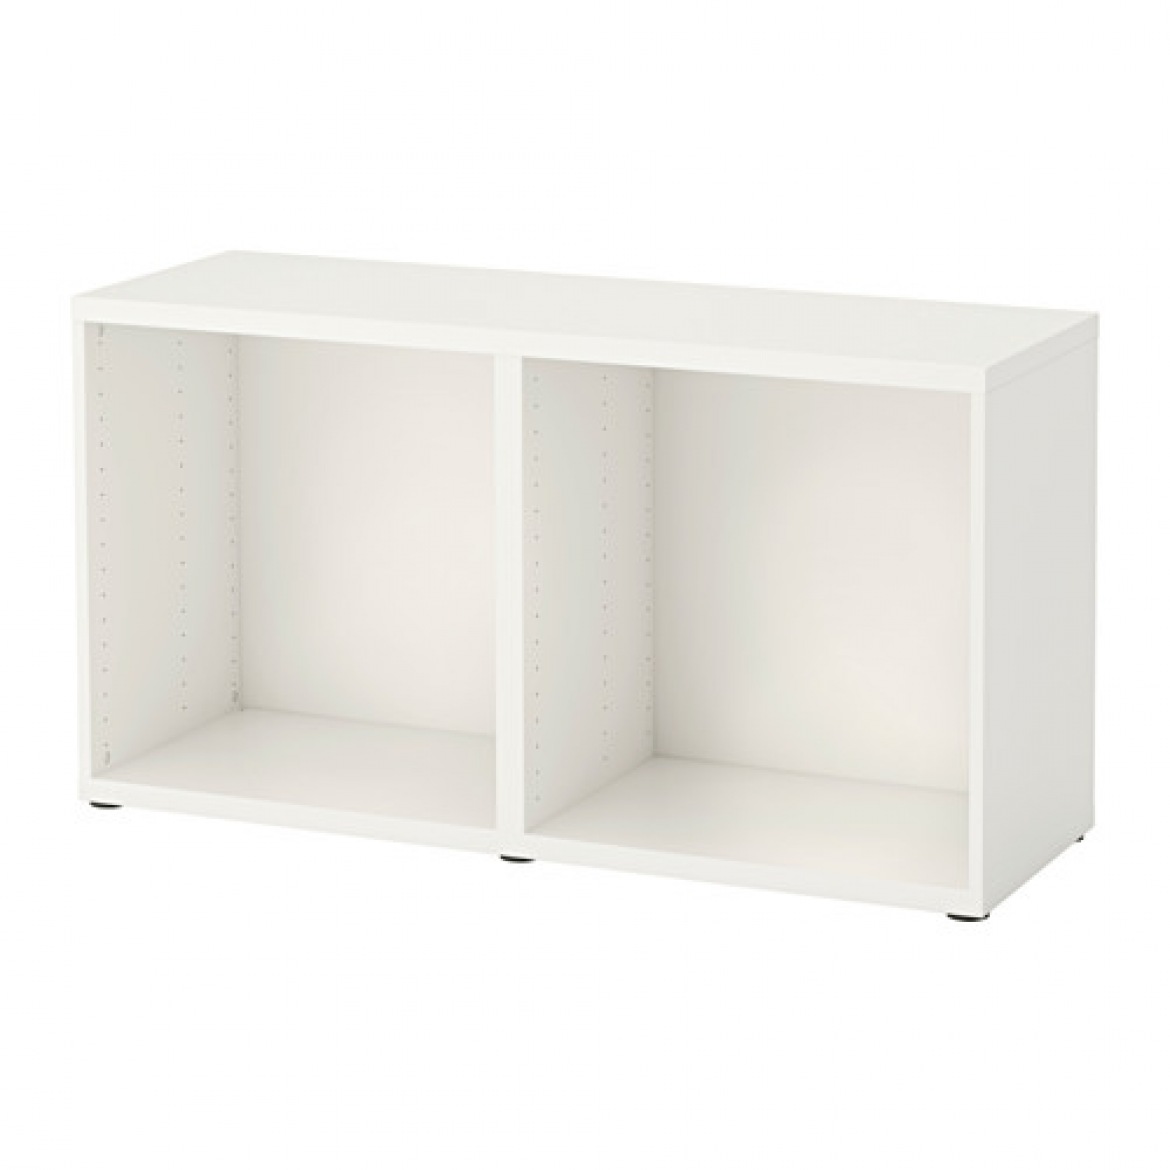 Biała szafka IKEA (53389)